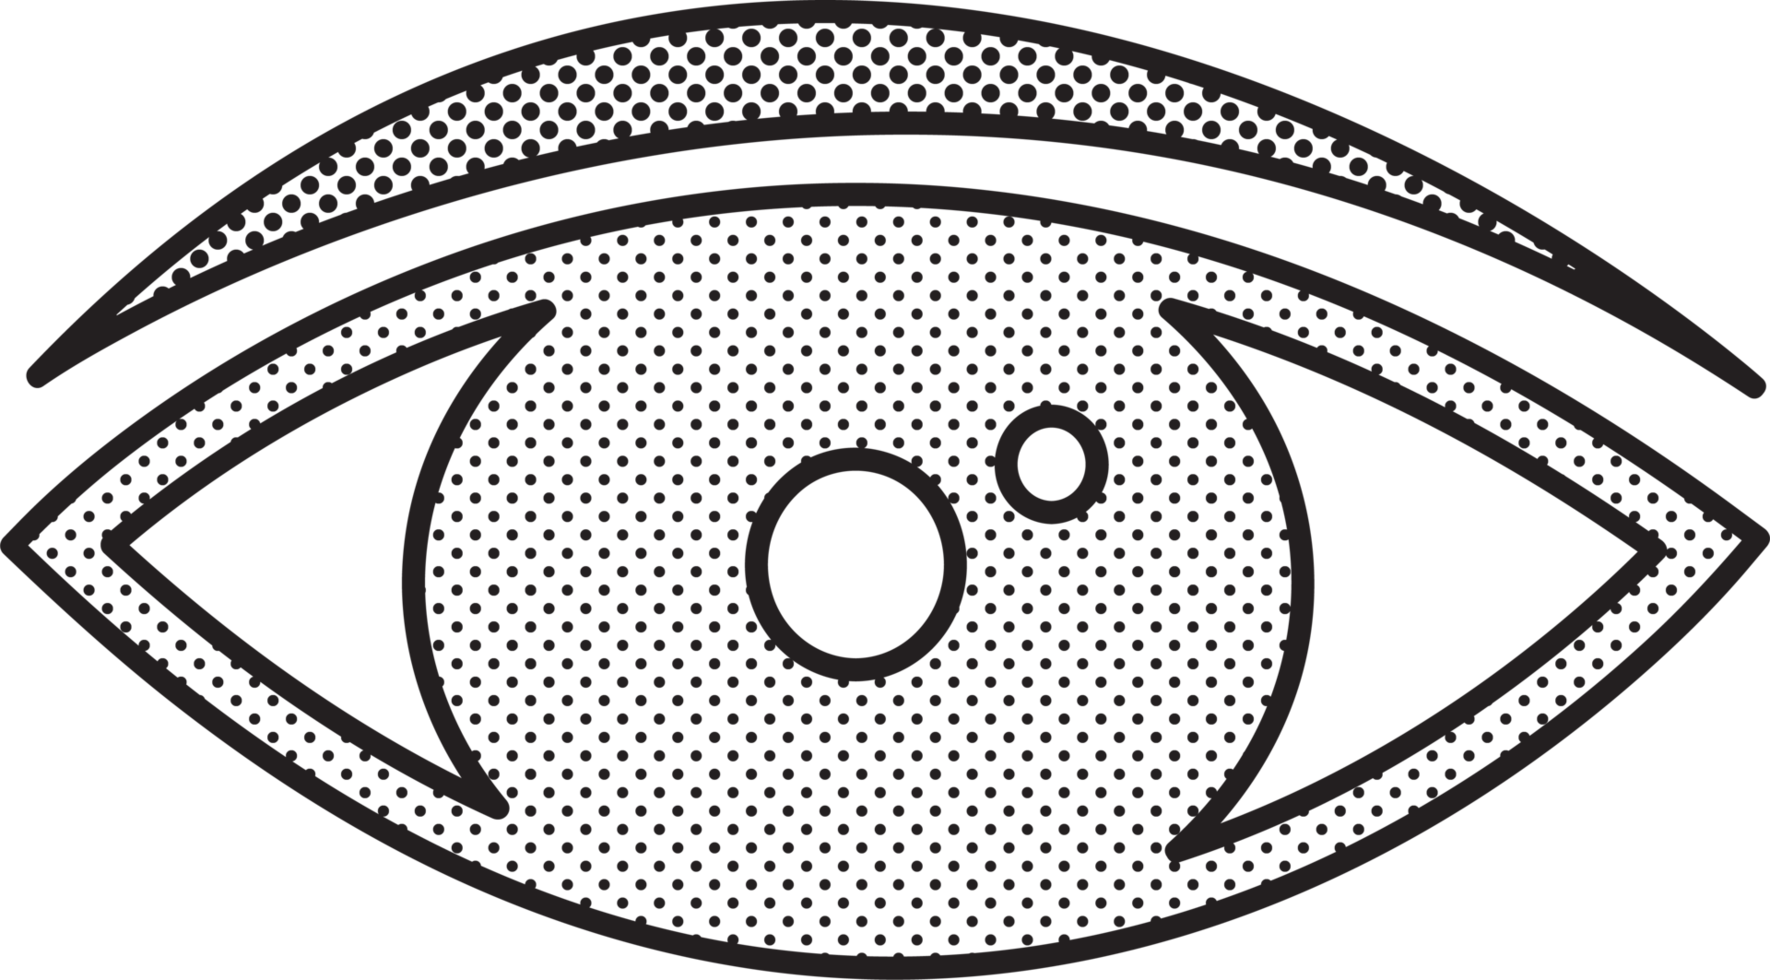 Eye icon sign symbom design png